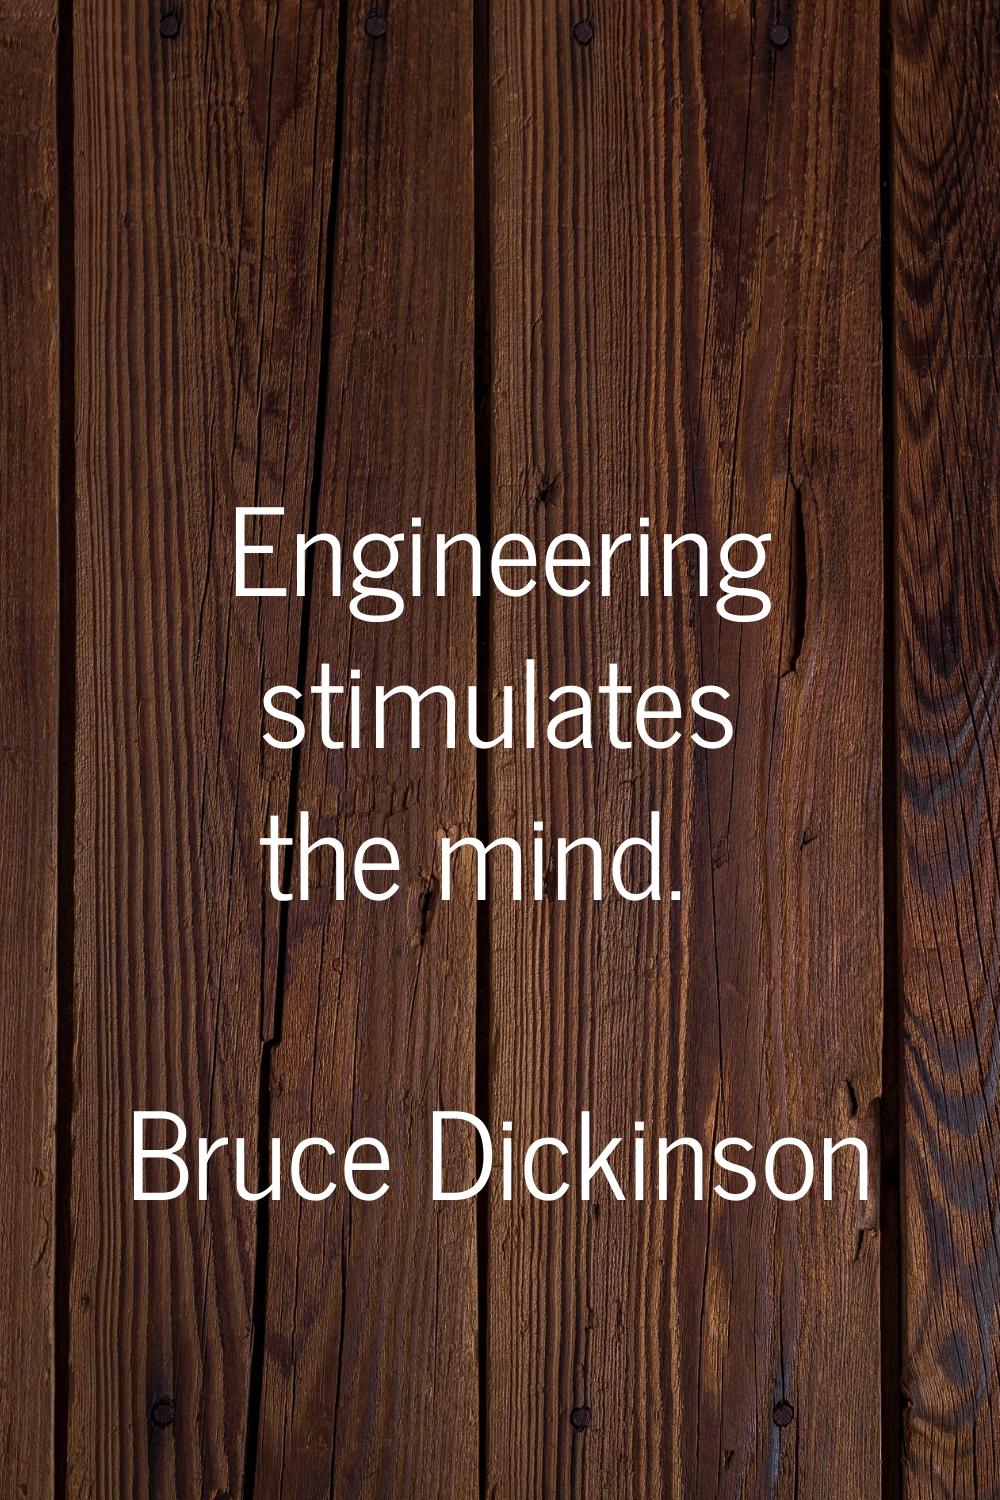 Engineering stimulates the mind.